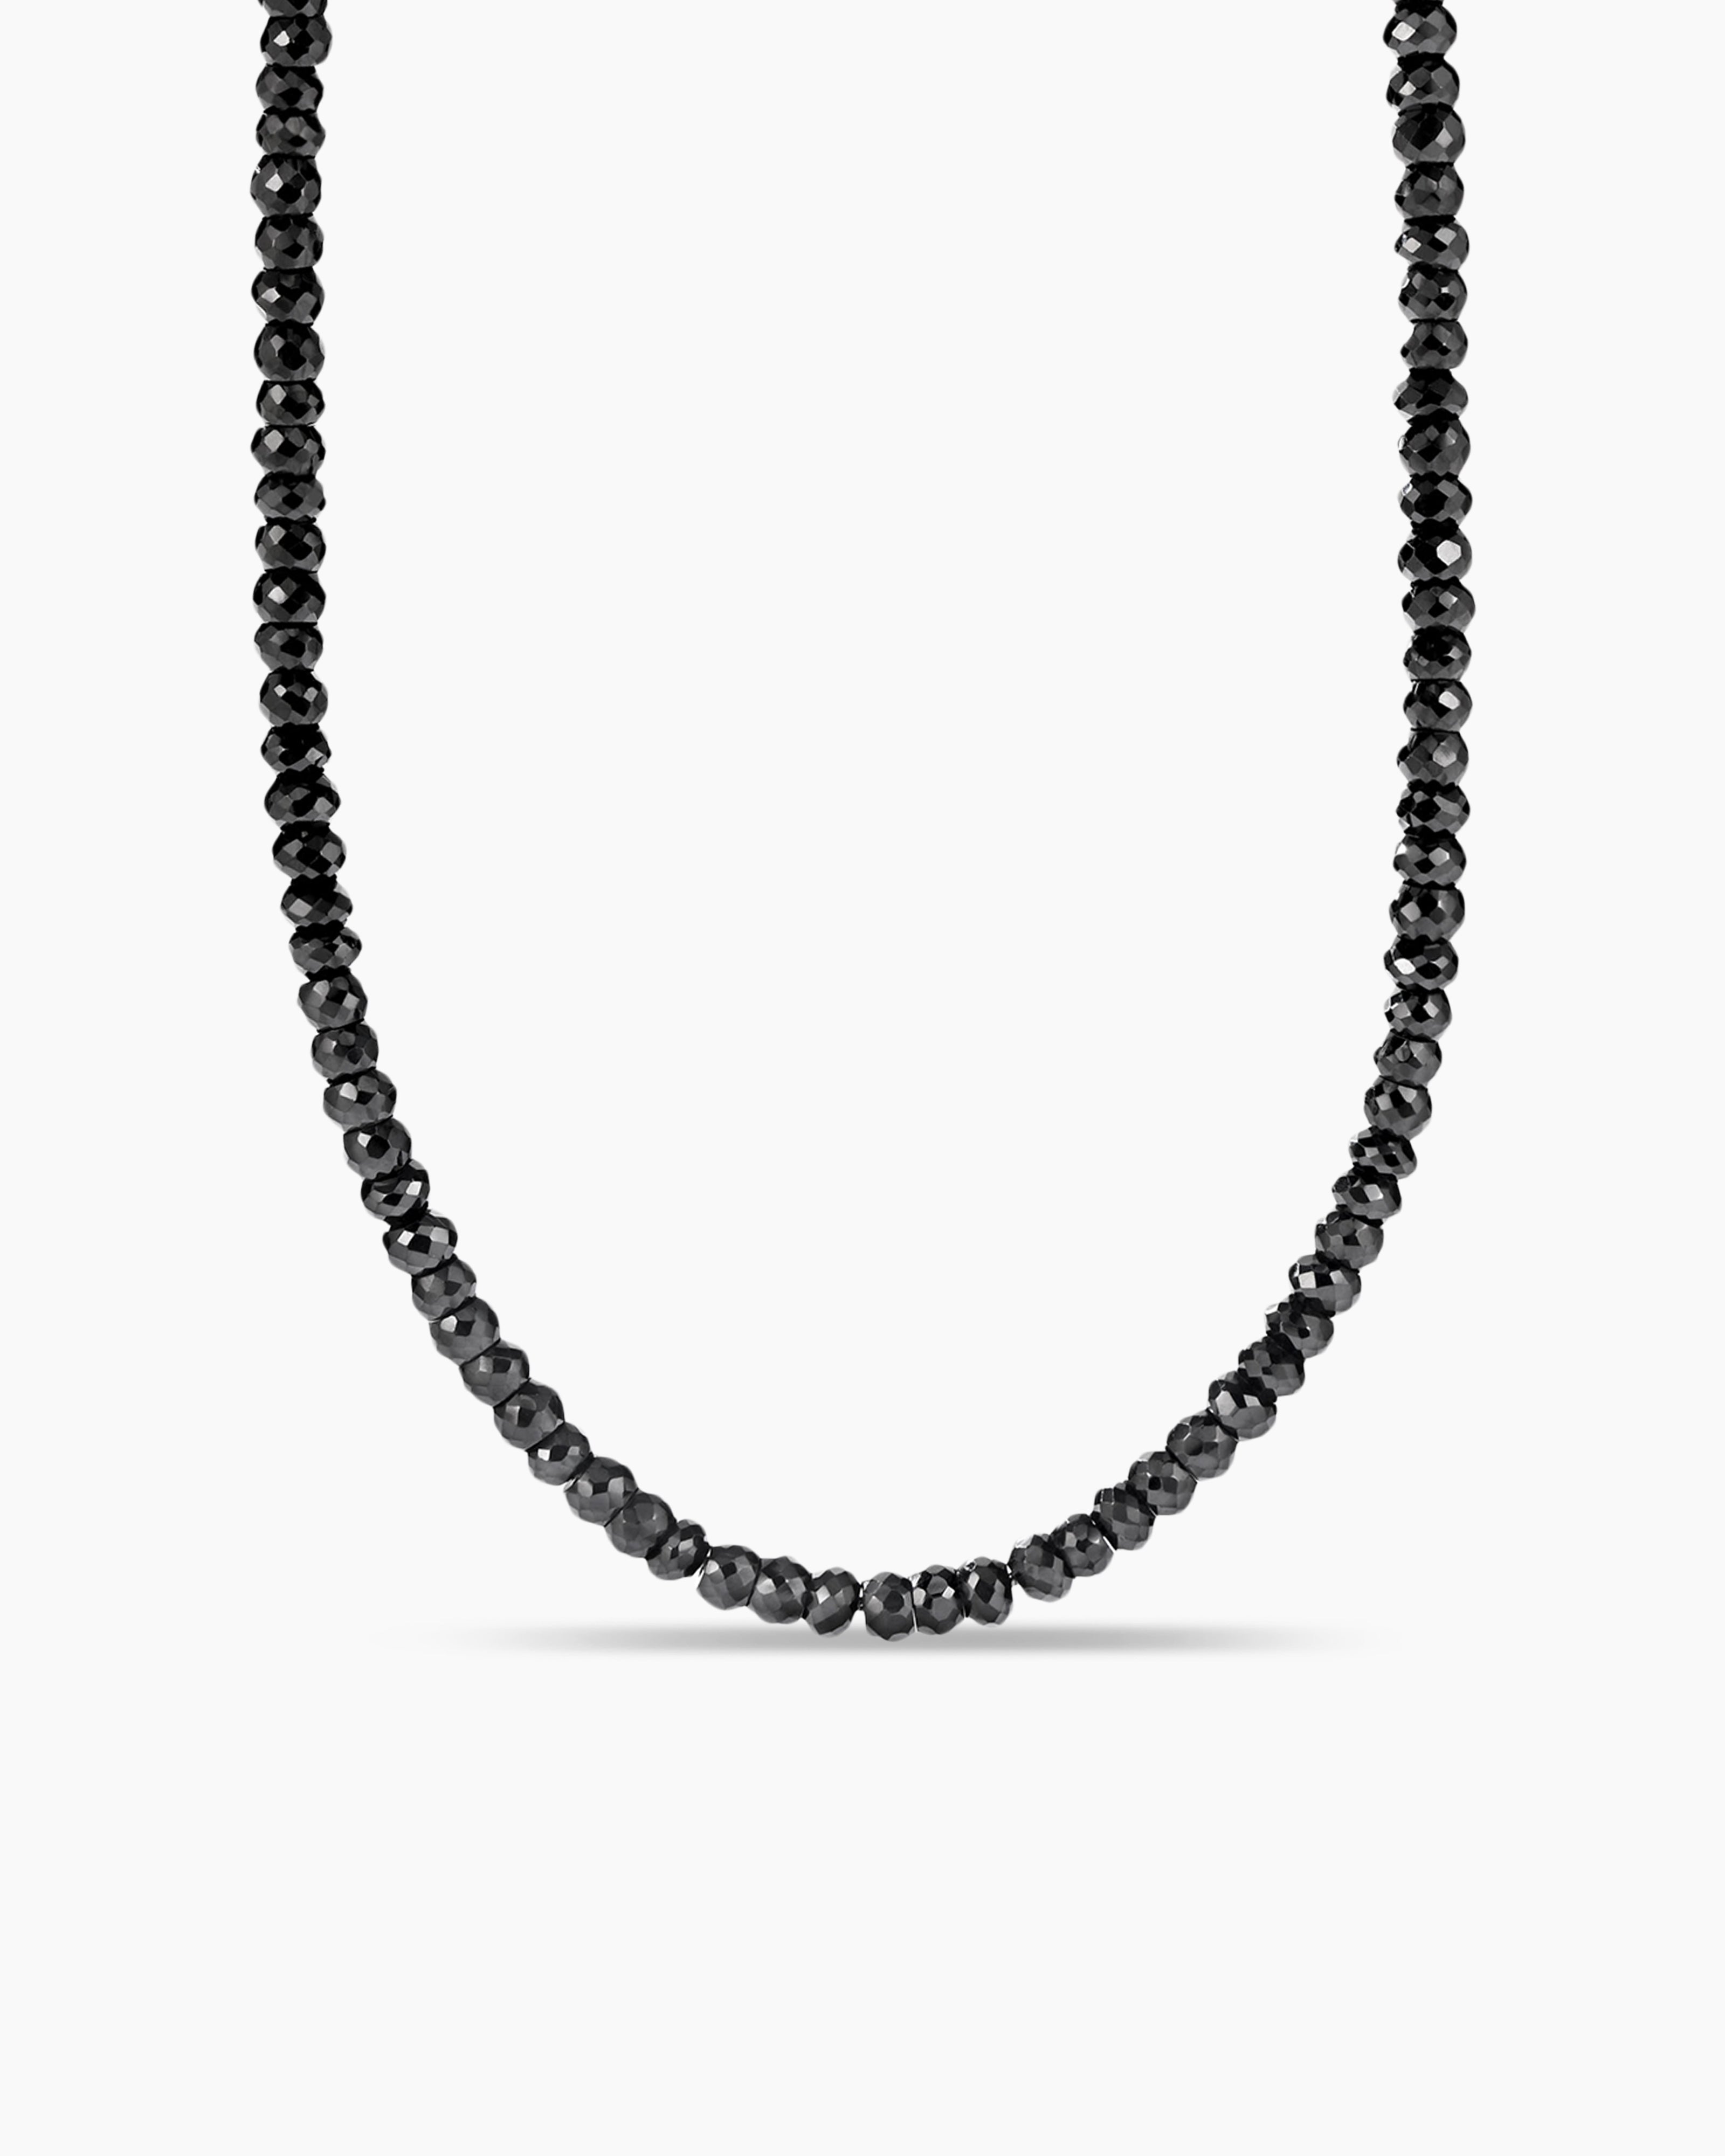 David Yurman EU | Spiritual Beads Necklace in Sterling Silver with  Labradorite, 5mm | Beaded necklace, Black spinel necklace, Sterling silver